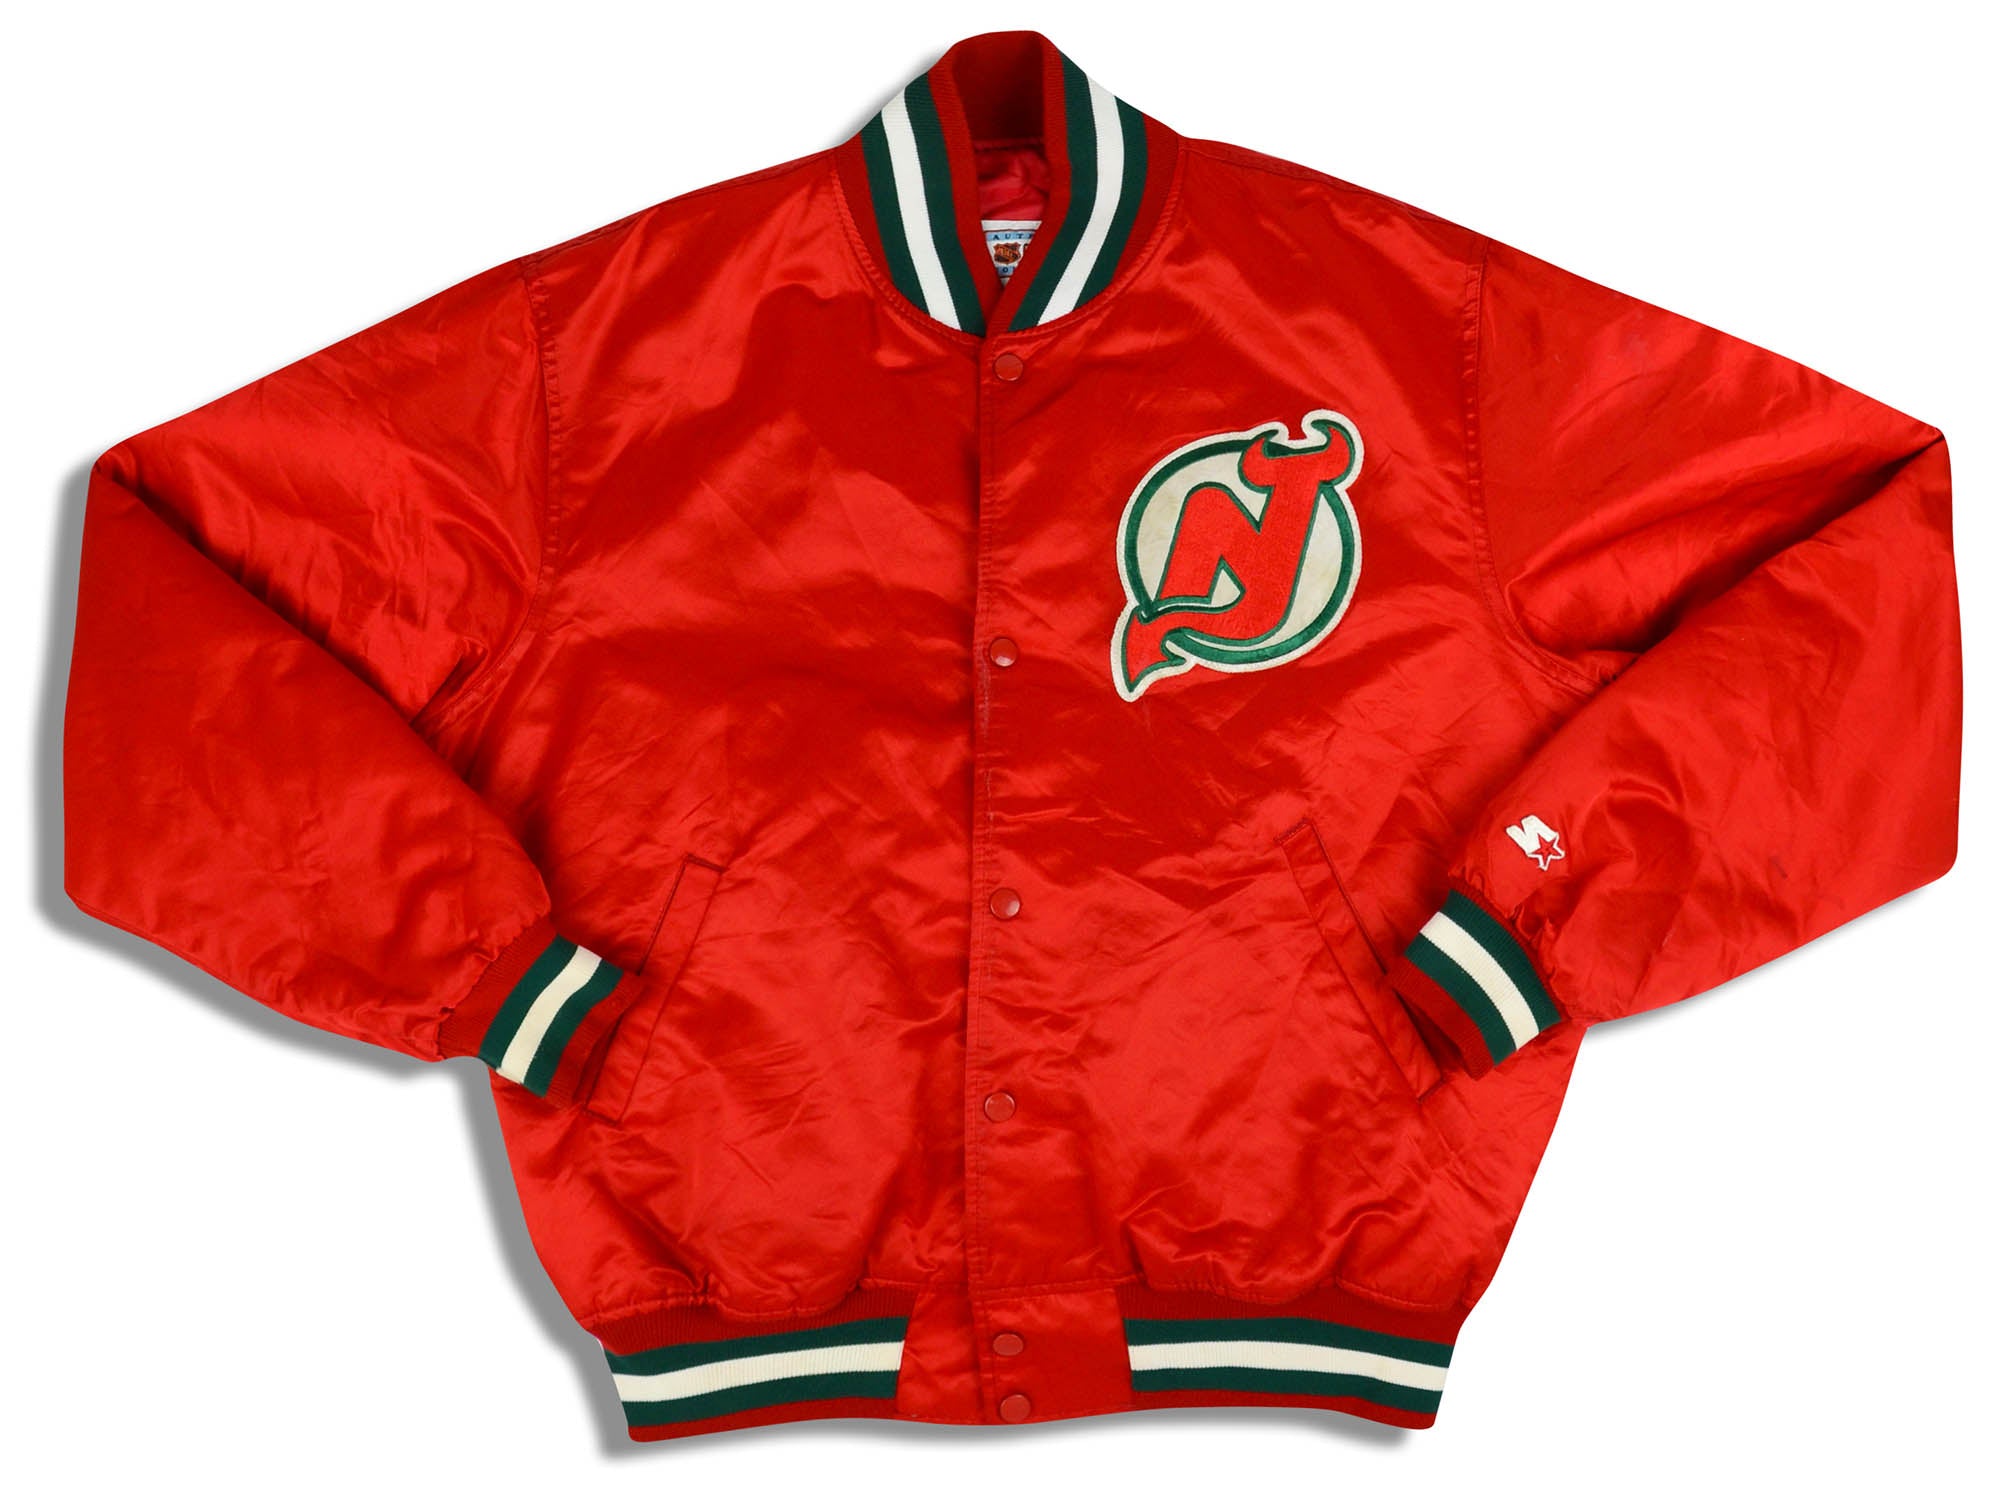 Vintage 90's NHL New Jersey Devils Starter Coat Jacket by  RackRaidersVintage, $40.00